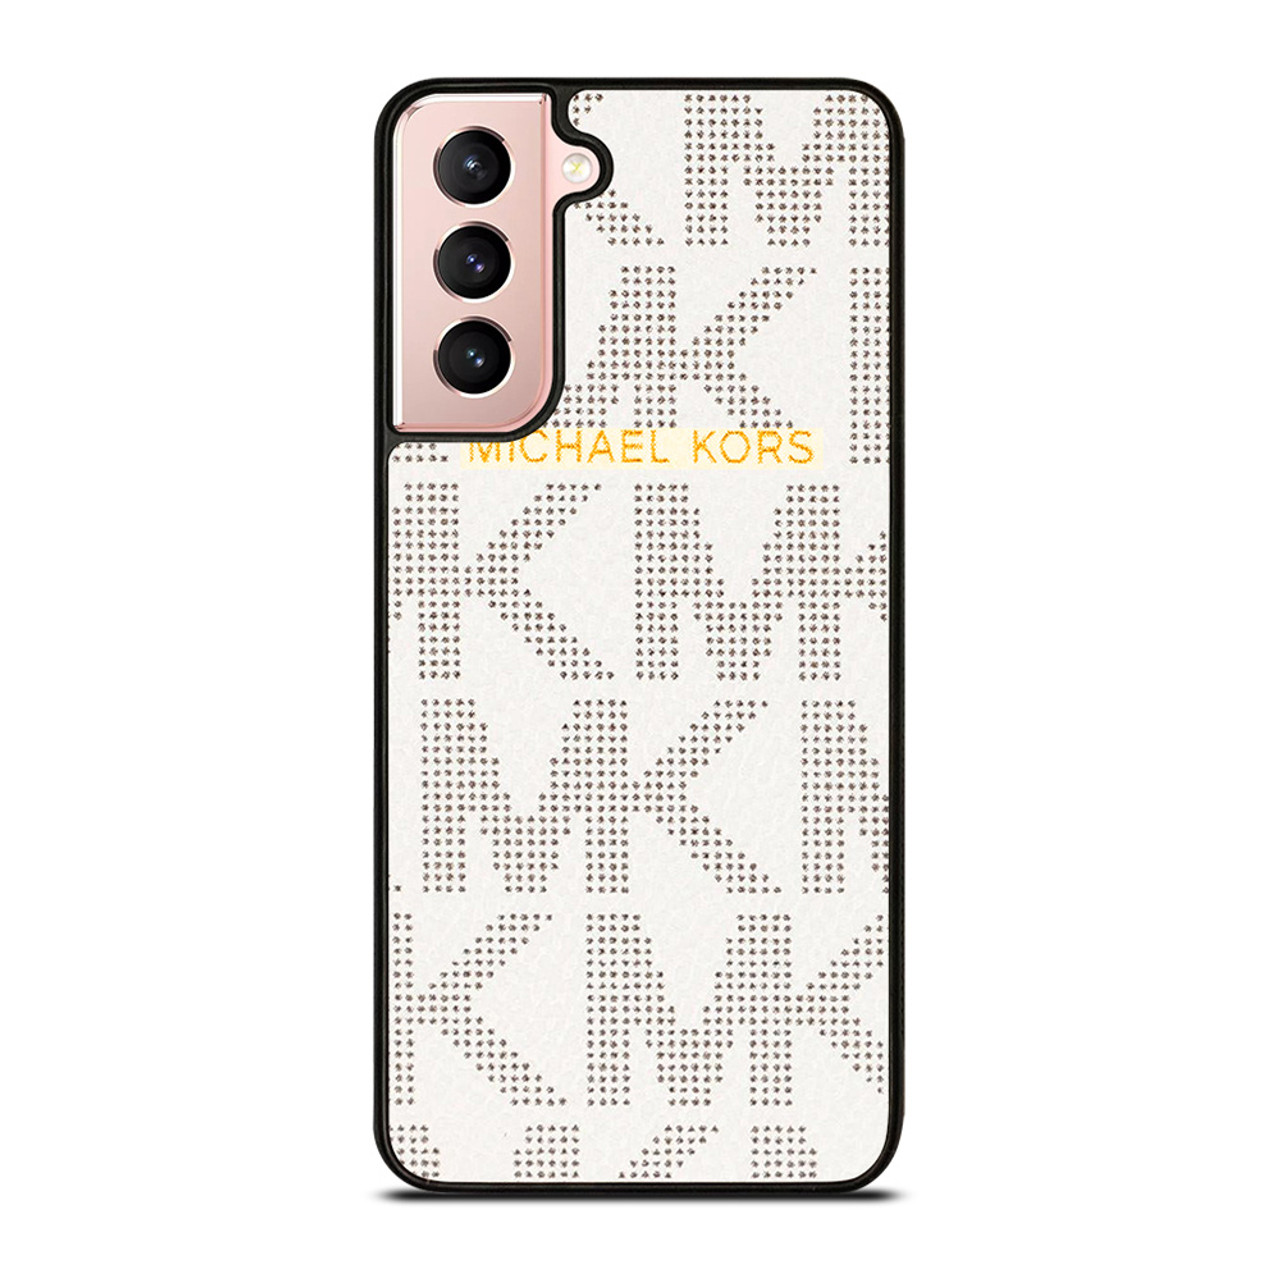 MICHAEL KORS MK POLKADOT Samsung Galaxy S21 Case Cover